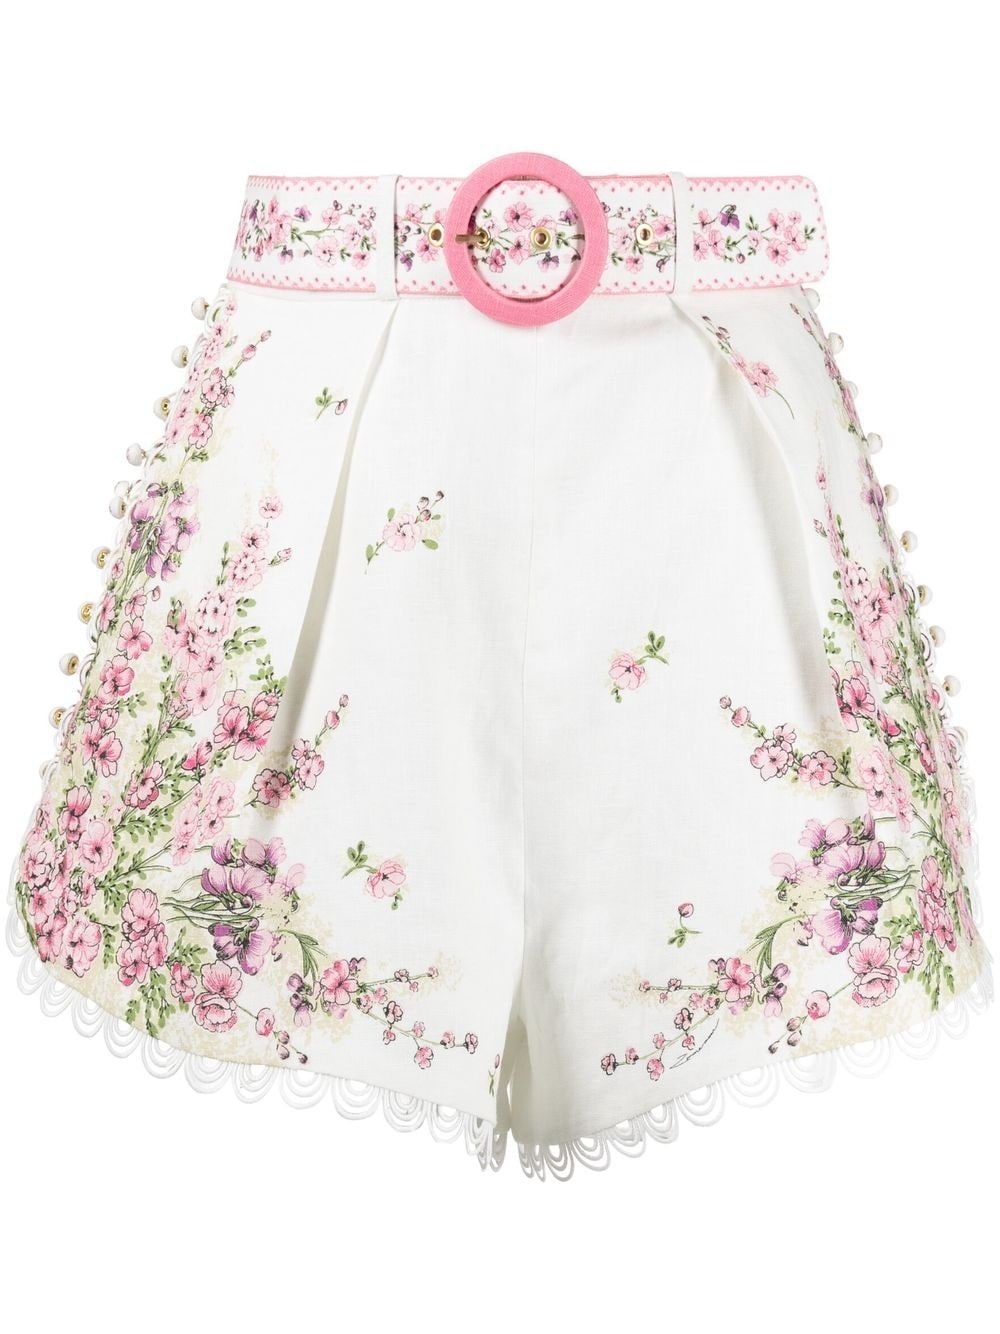 Pinko Kids floral-print elasticated cotton shorts - White